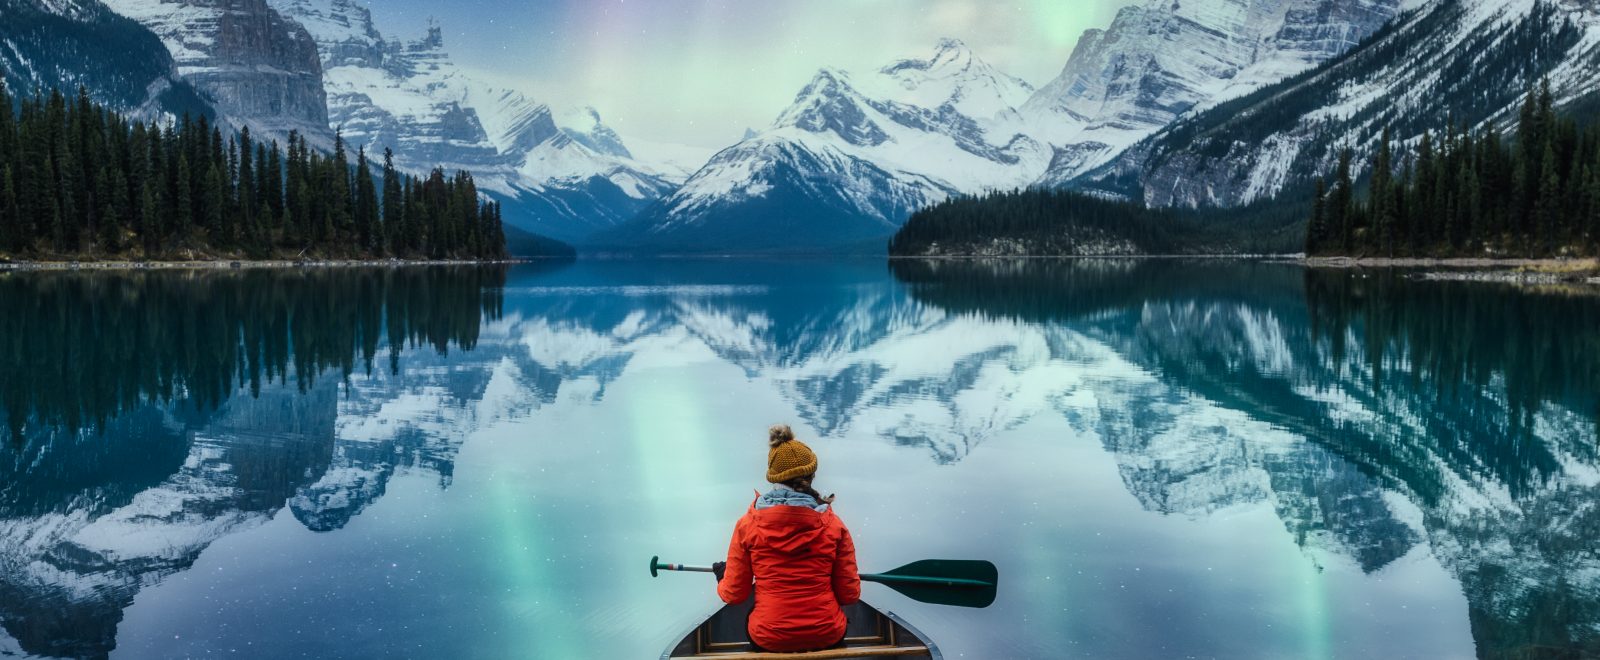 Beautiful aurora borealis over spirit island with female traveler on canoe at Jasper national park